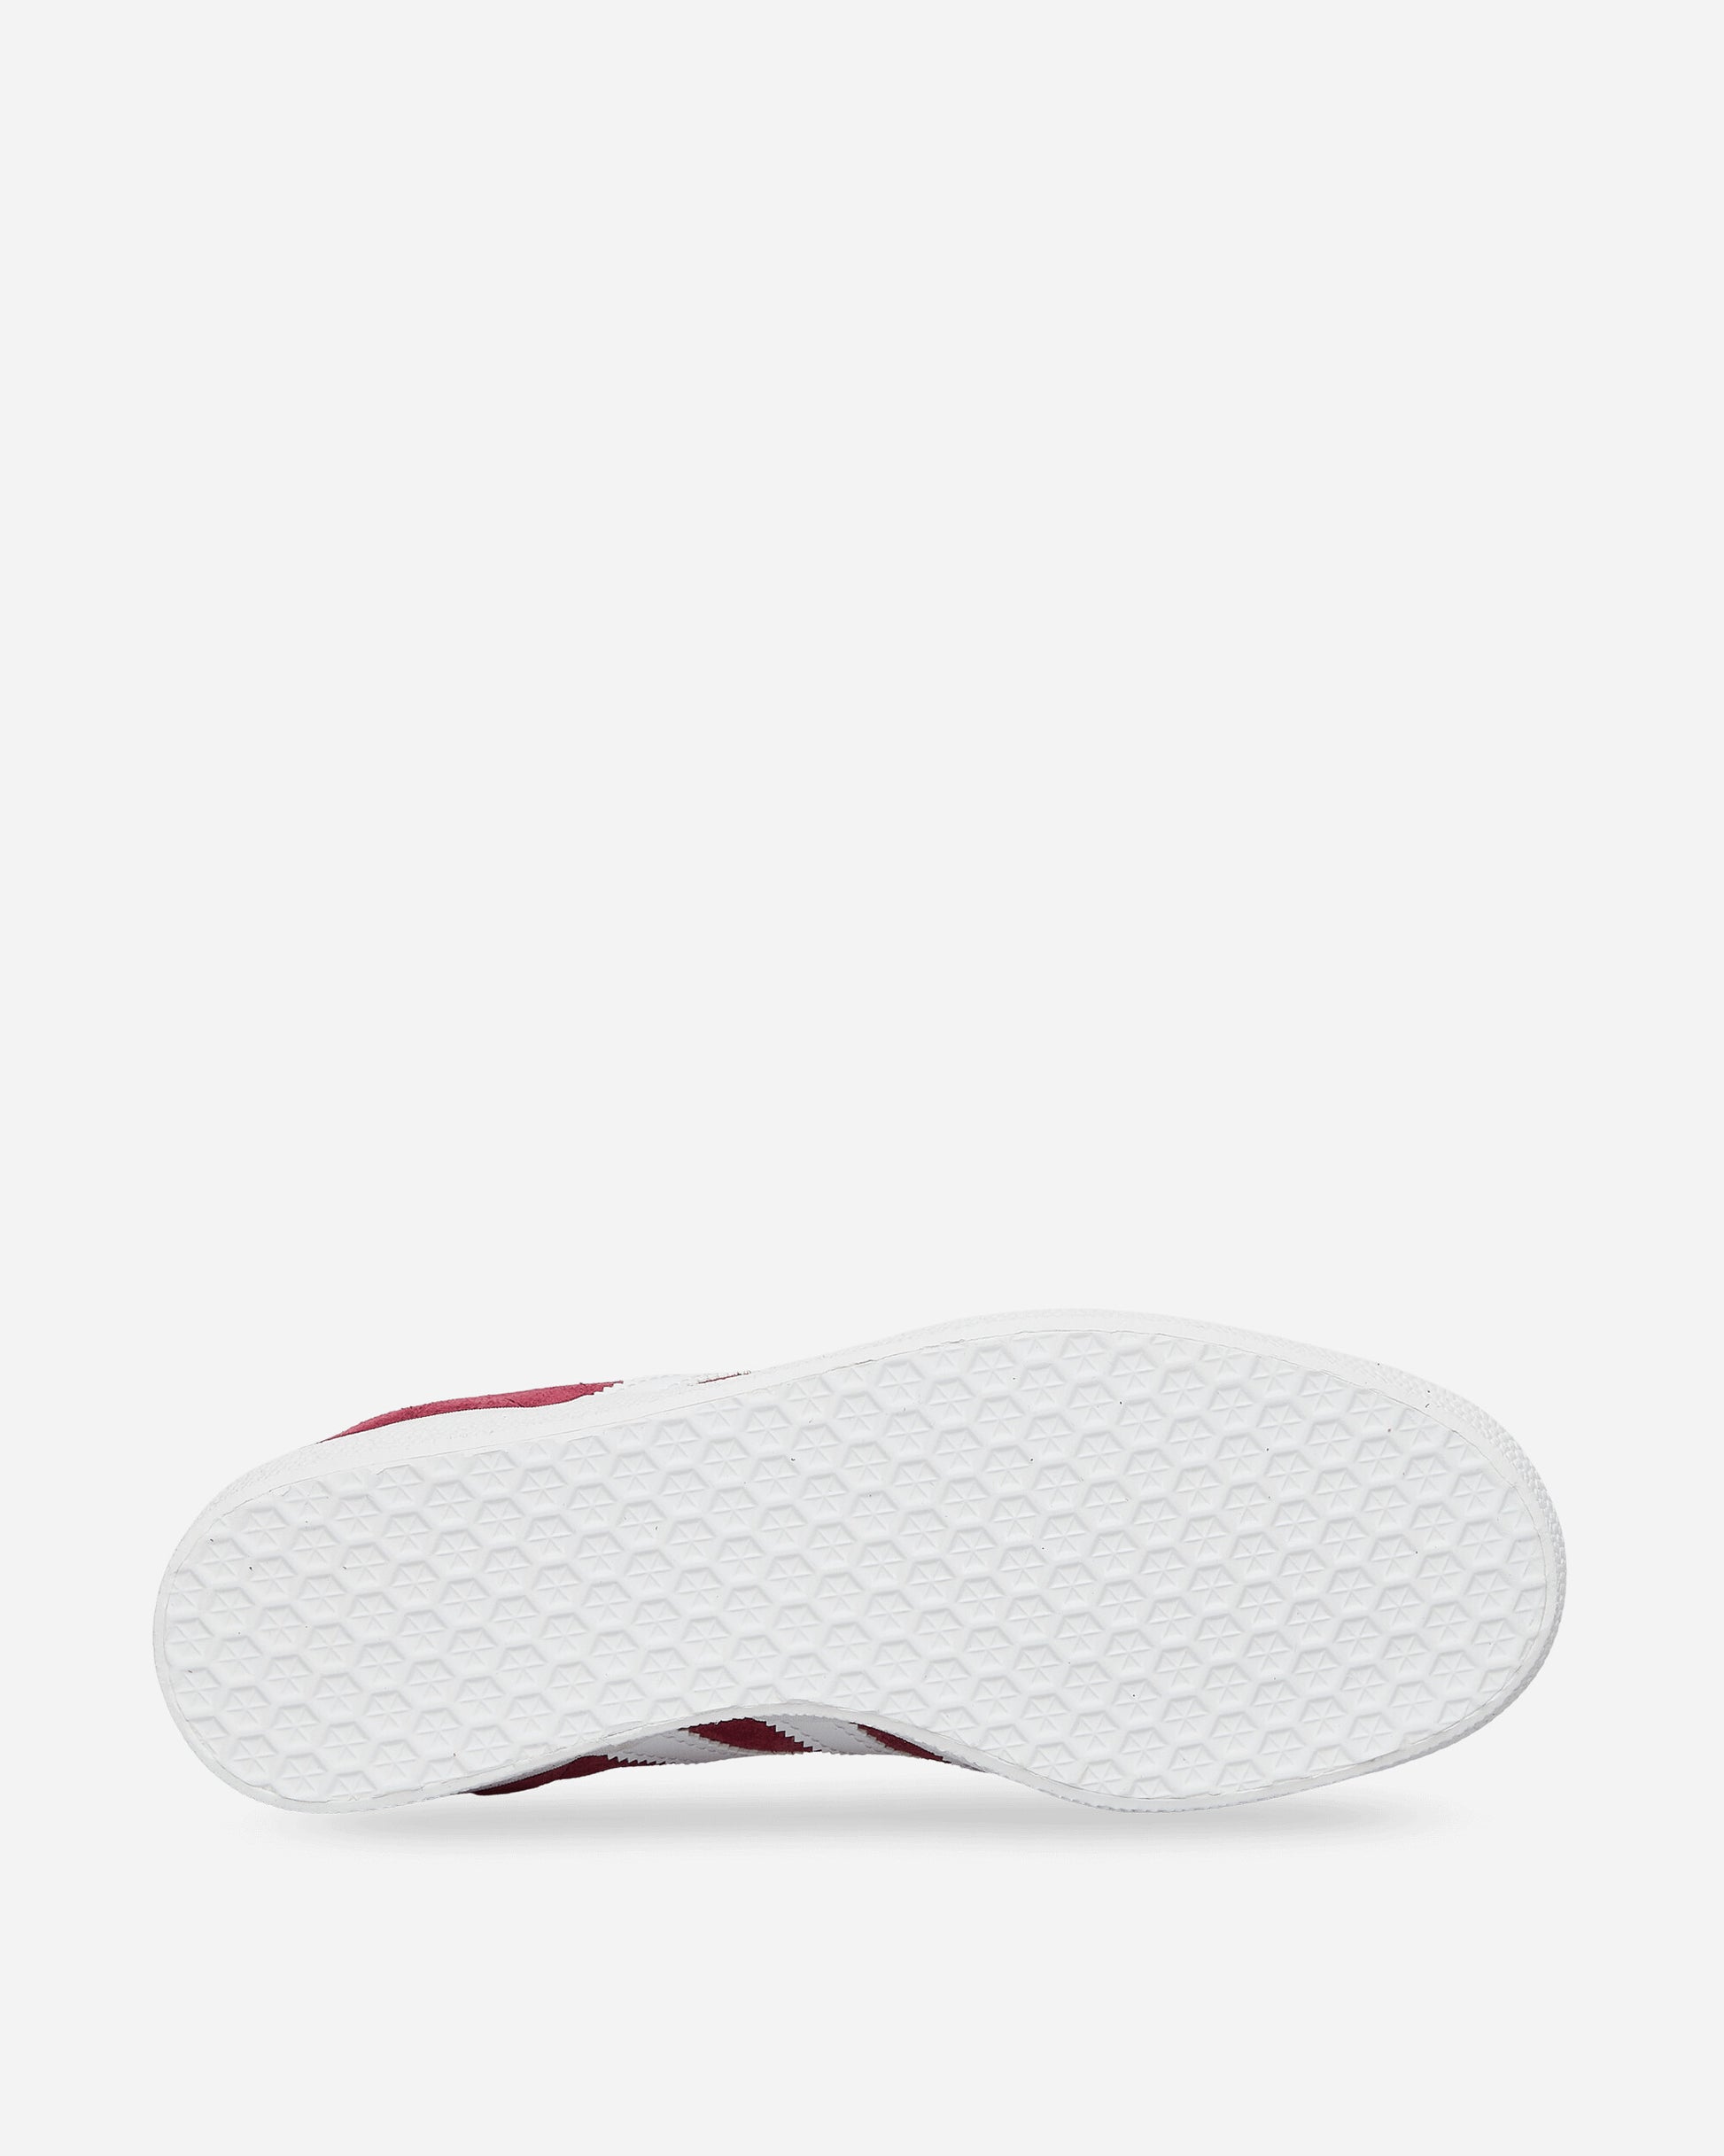 adidas Gazelle Cburgu/Ftwwht Sneakers Low B41645 001